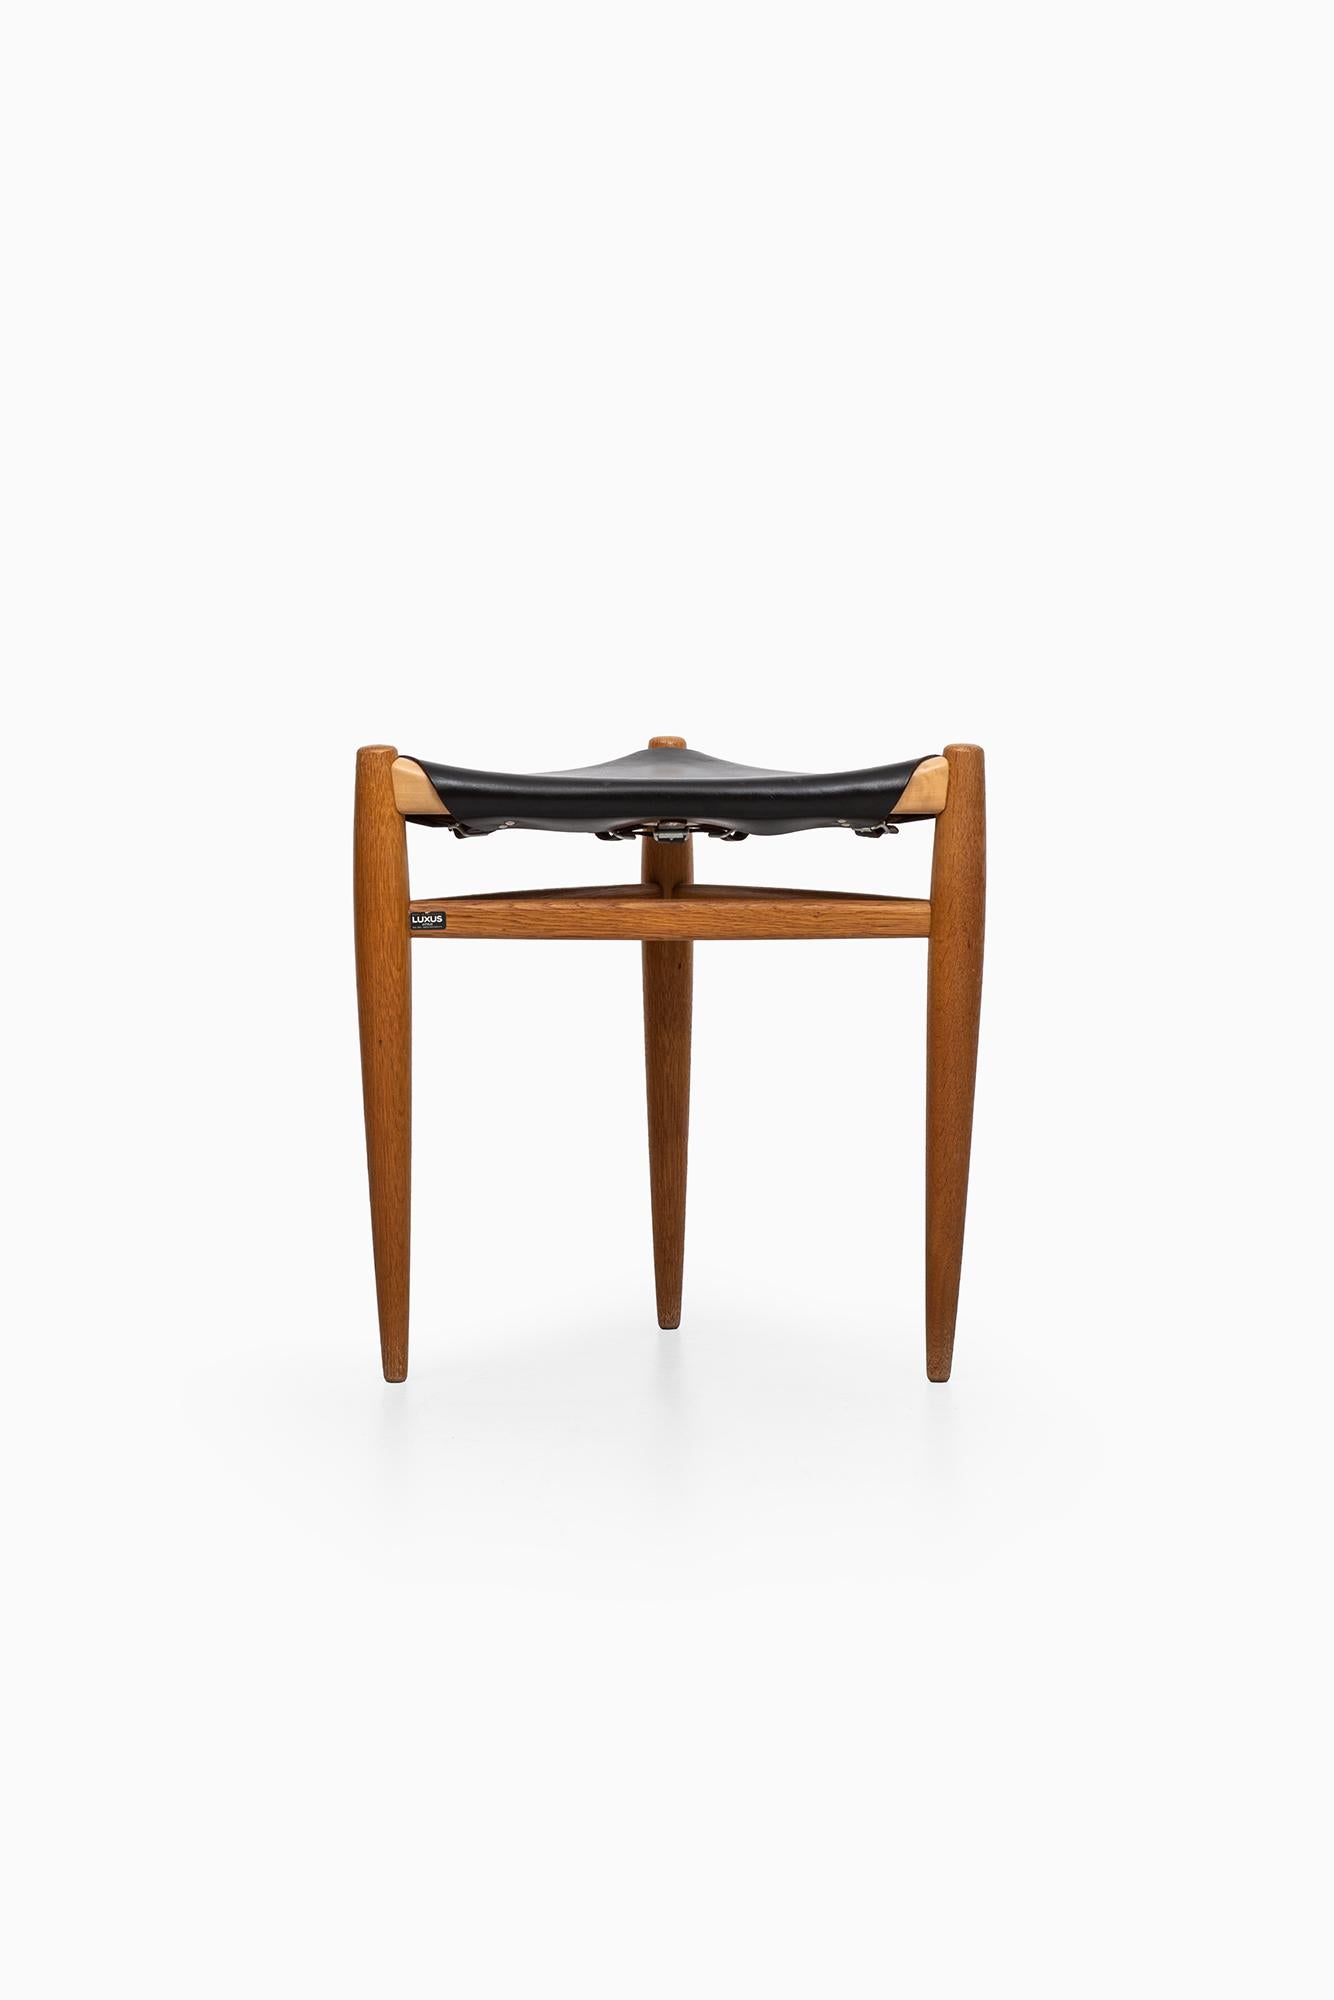 Rare stool designed by Uno & Östen Kristiansson. Produced by Luxus in Vittsjö, Sweden.